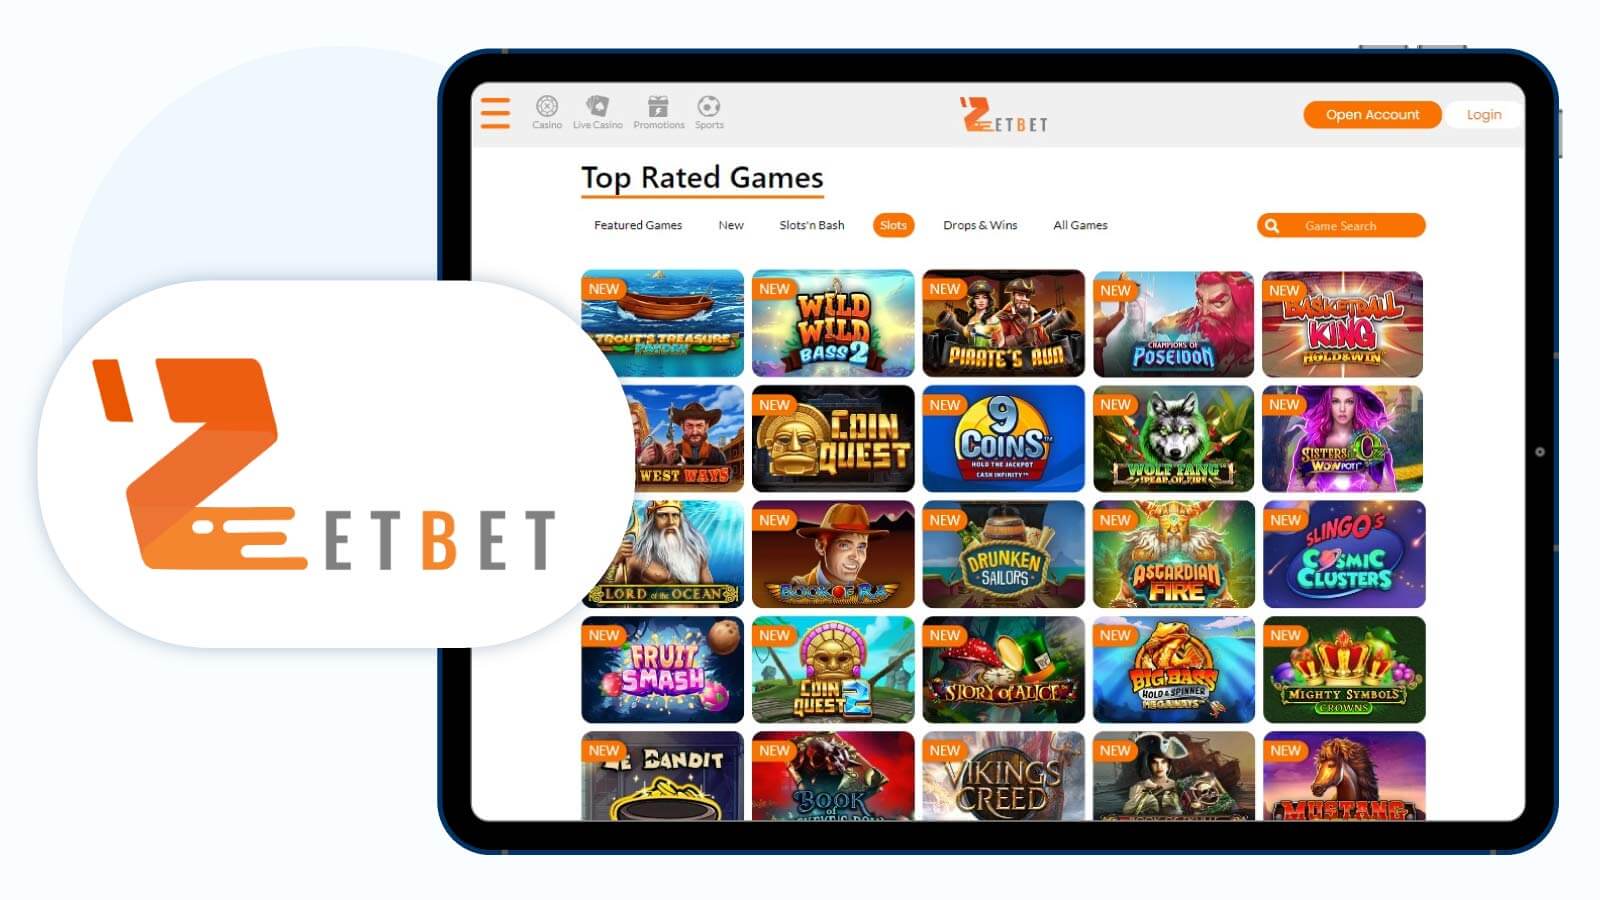 ZetBet-Casino-Top-Online-Casino-for-New-Players